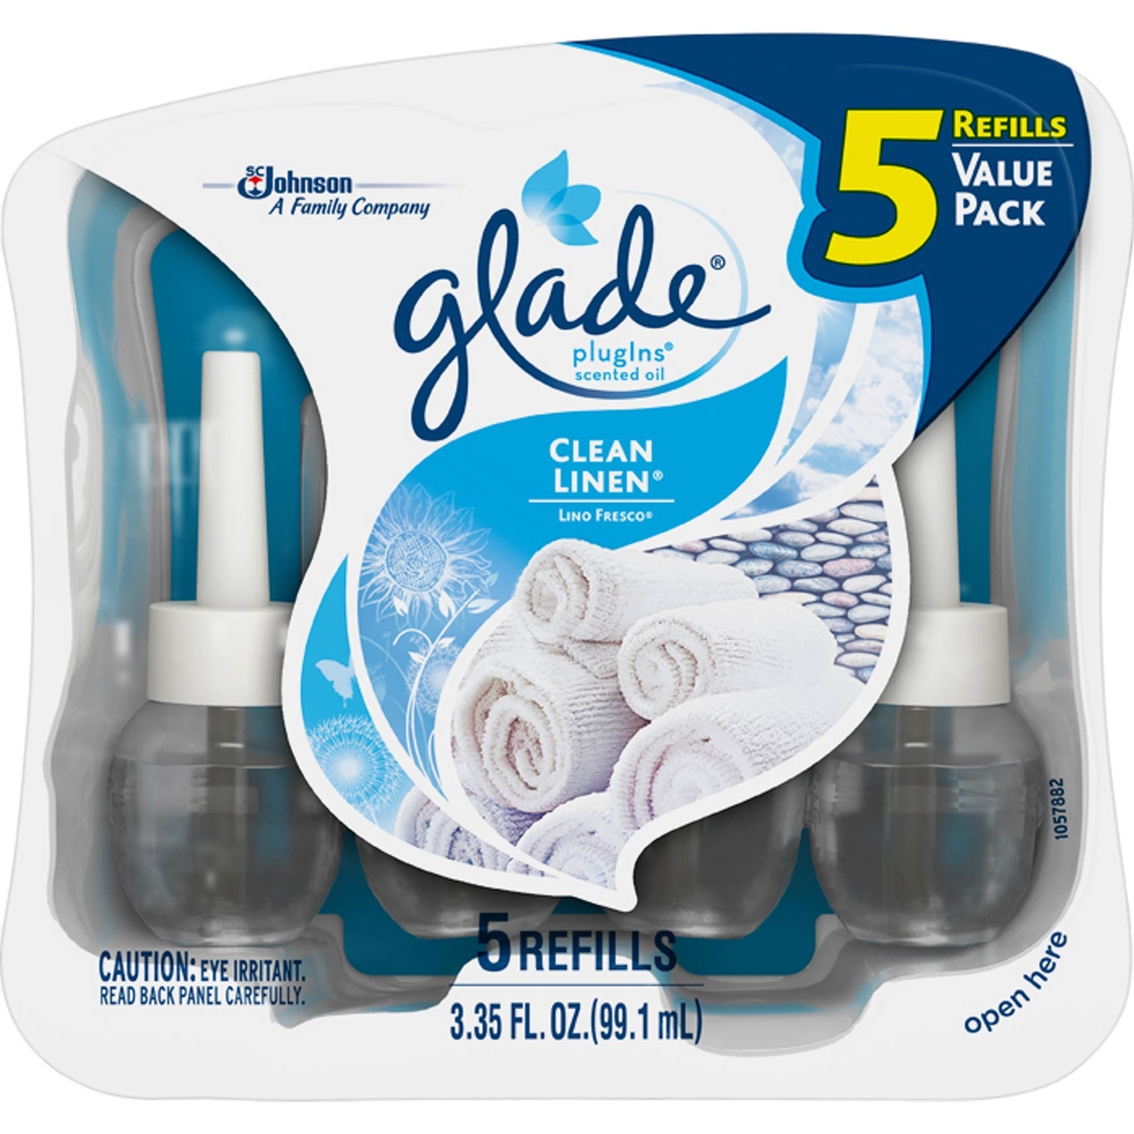 Glade PlugIns Scented Oil, Warmer + 6 Refills (Clean Linen)